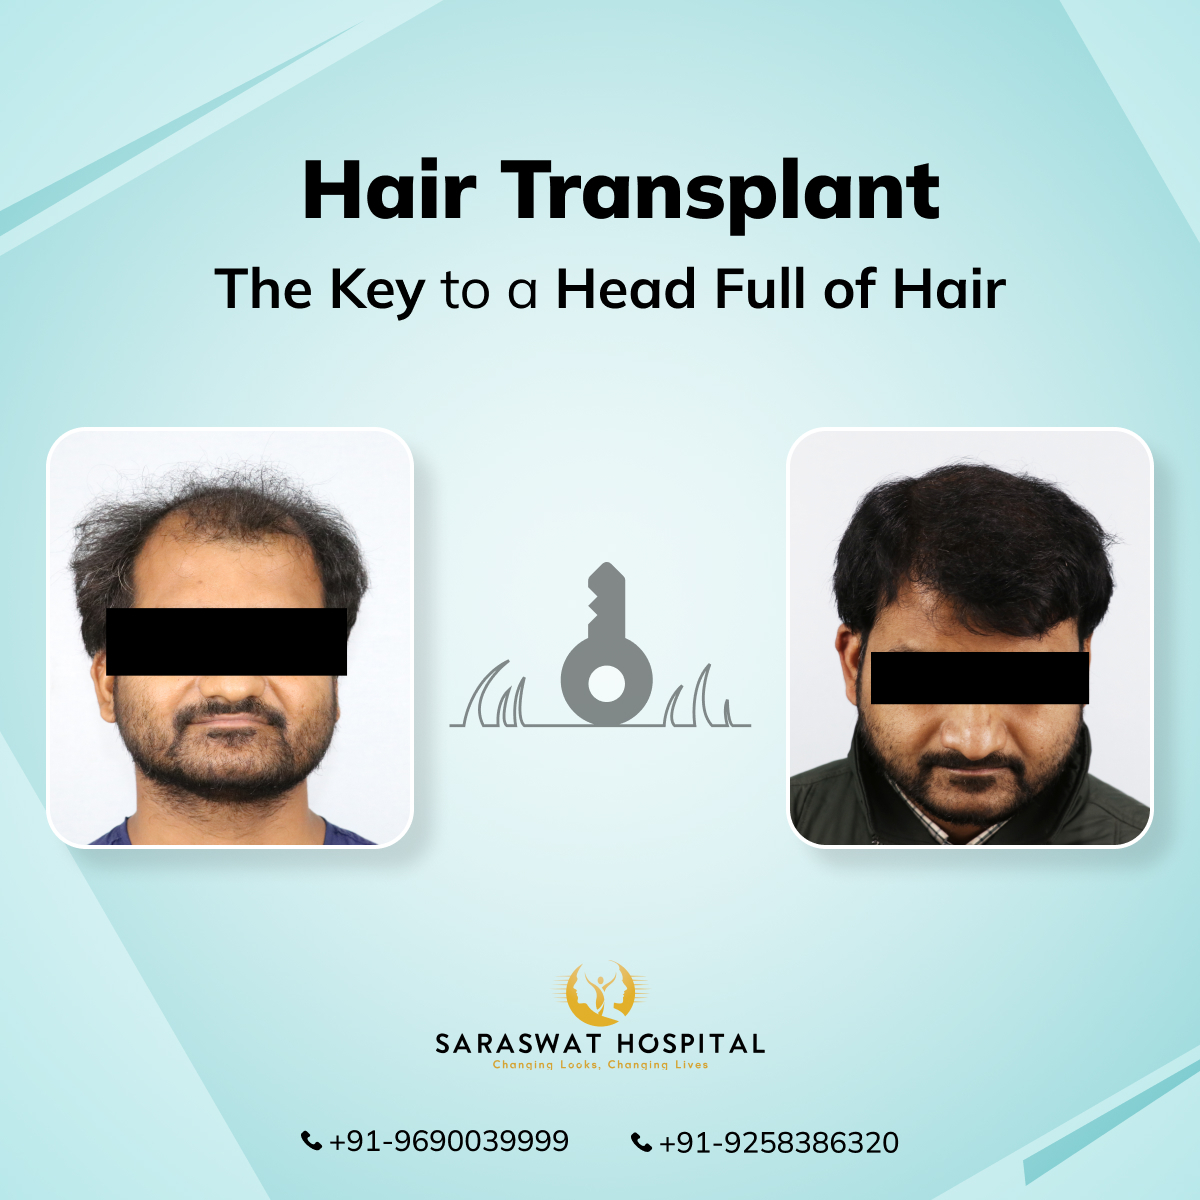 Hair Transplant- The Key to a Full Head of Hair